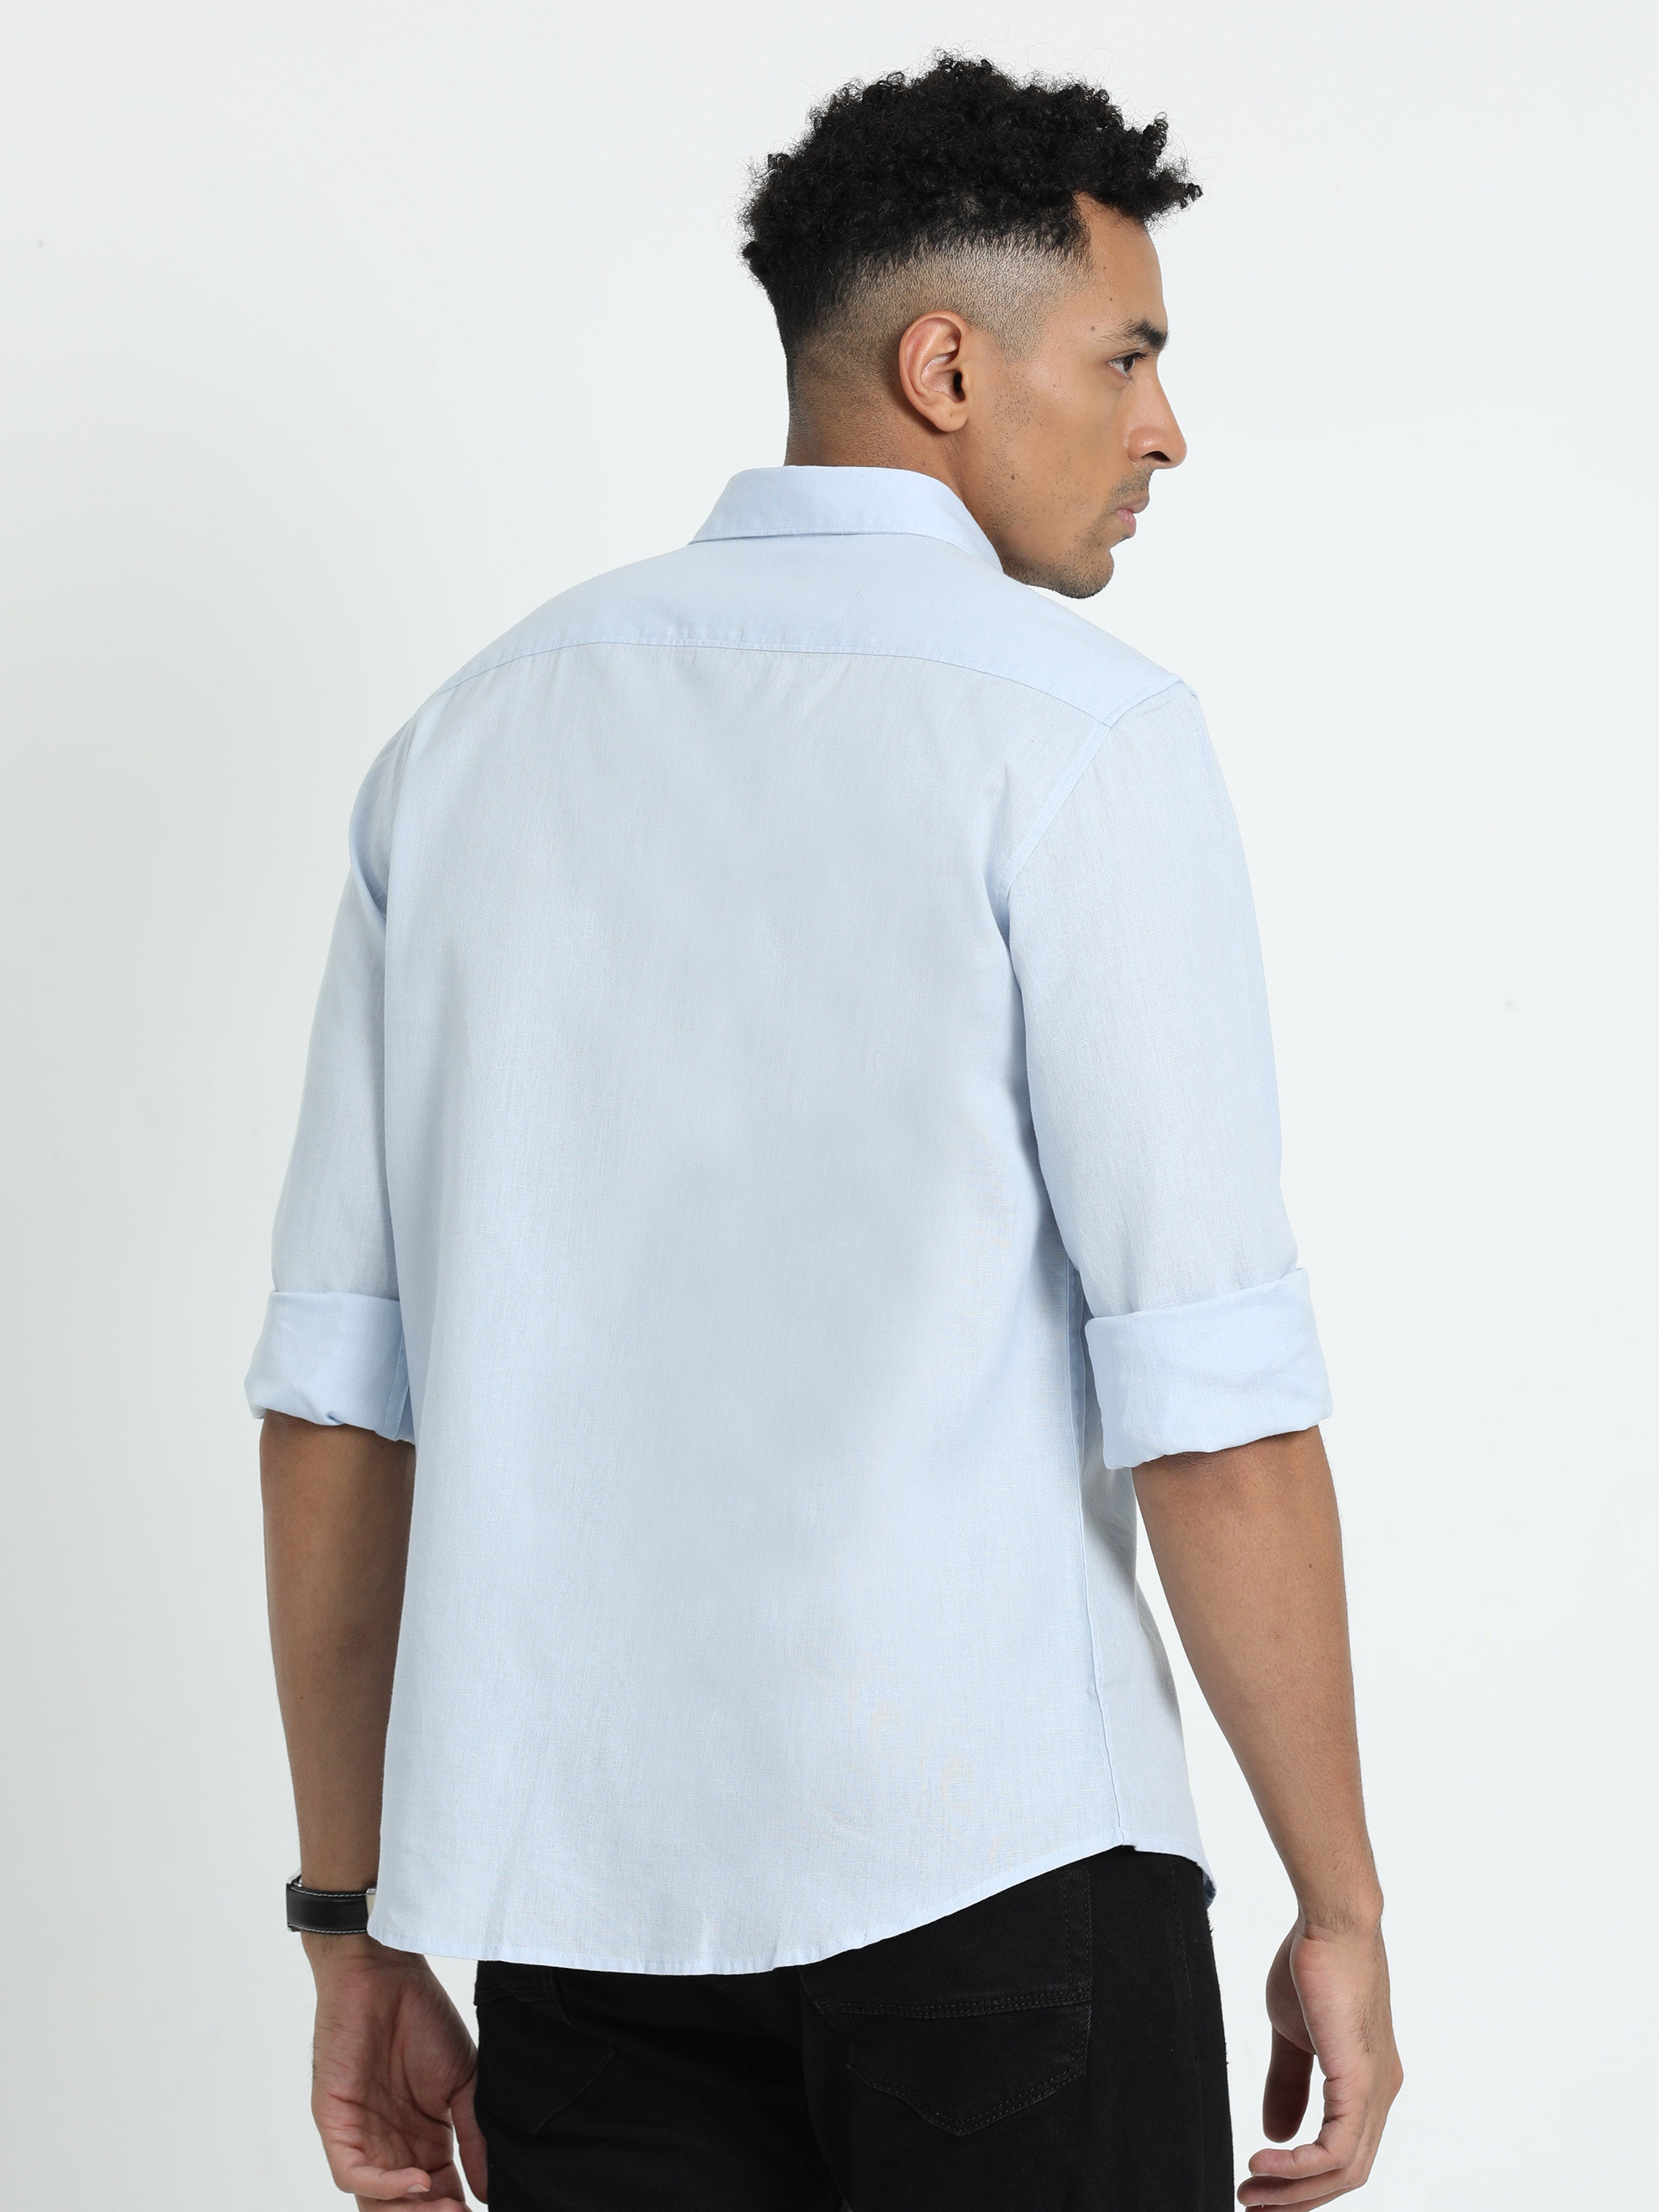 Classic Polo Men's Solid Sky Cotton Linen Full Sleeve Woven Shirt | DAMASK-SKY SF FS